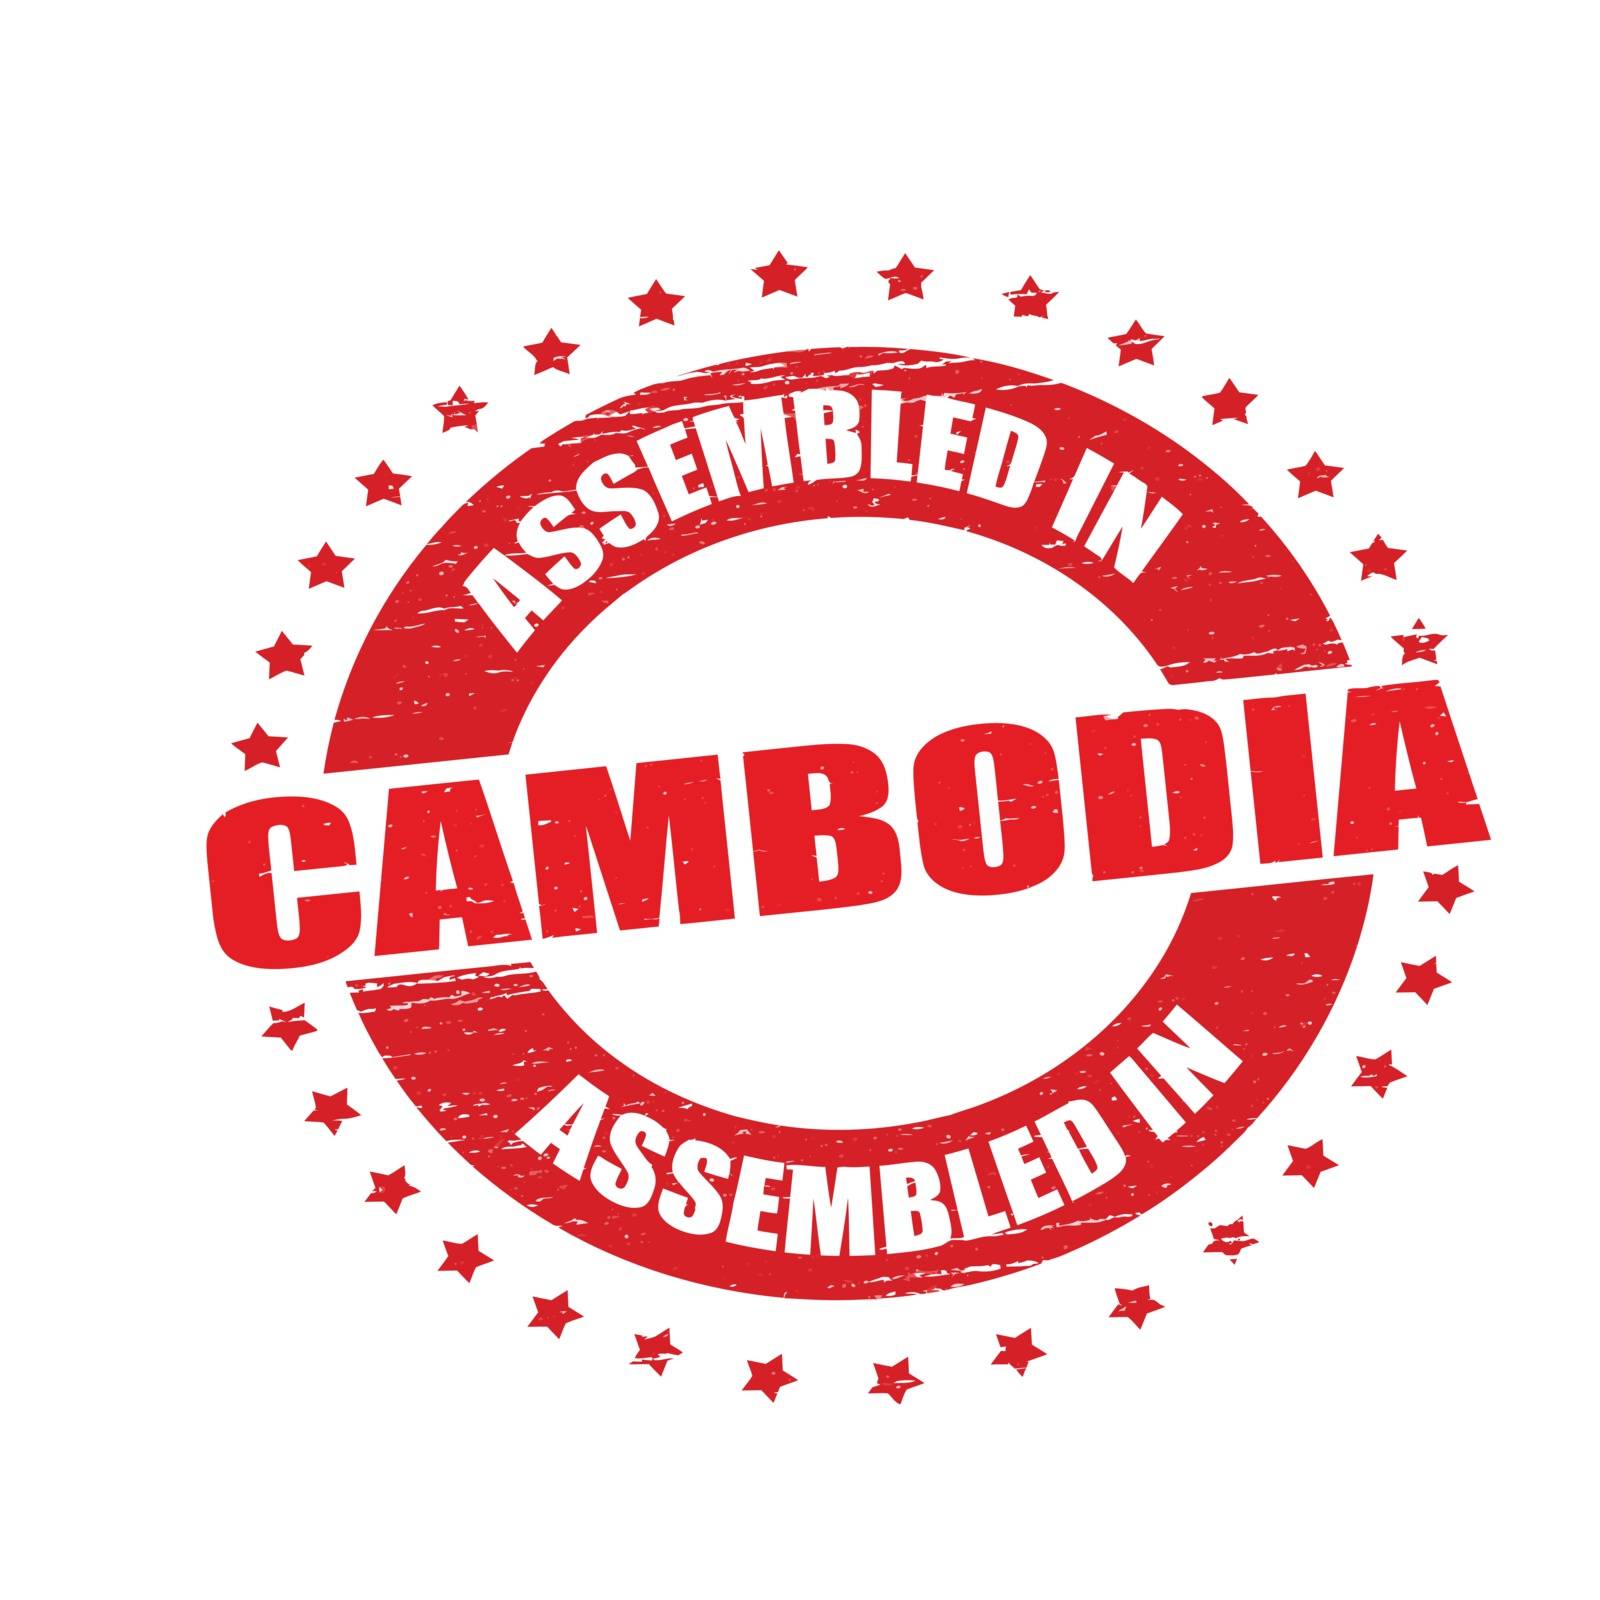 Assembled in Cambodia by carmenbobo